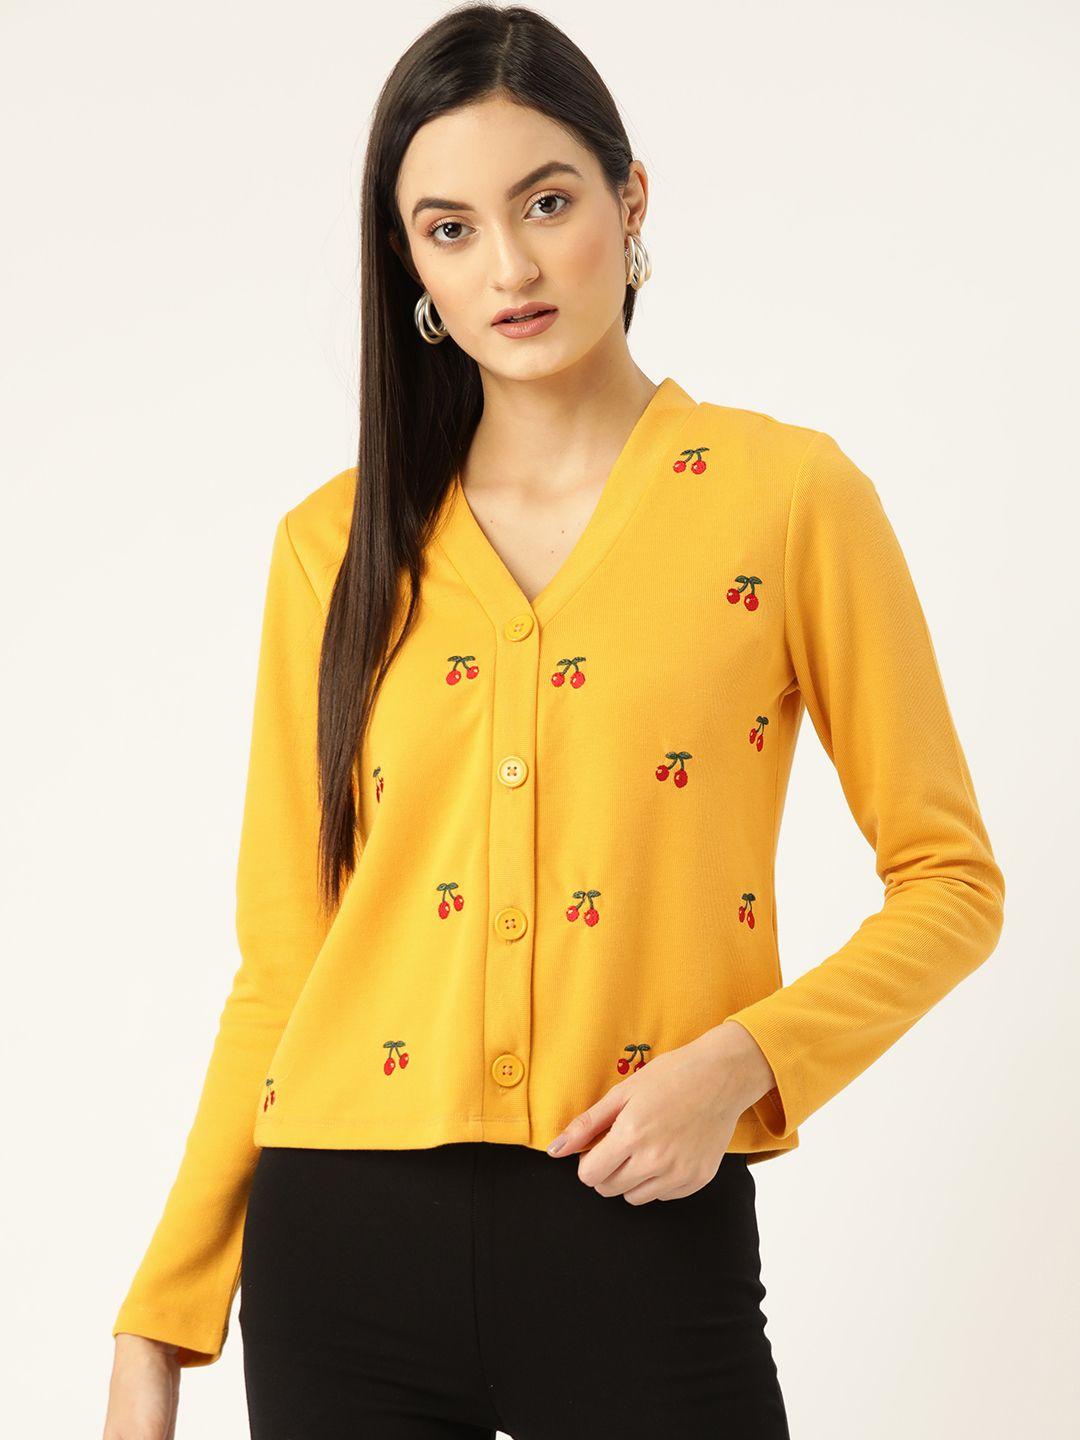 kassually women mustard yellow embroidered cardigan sweater